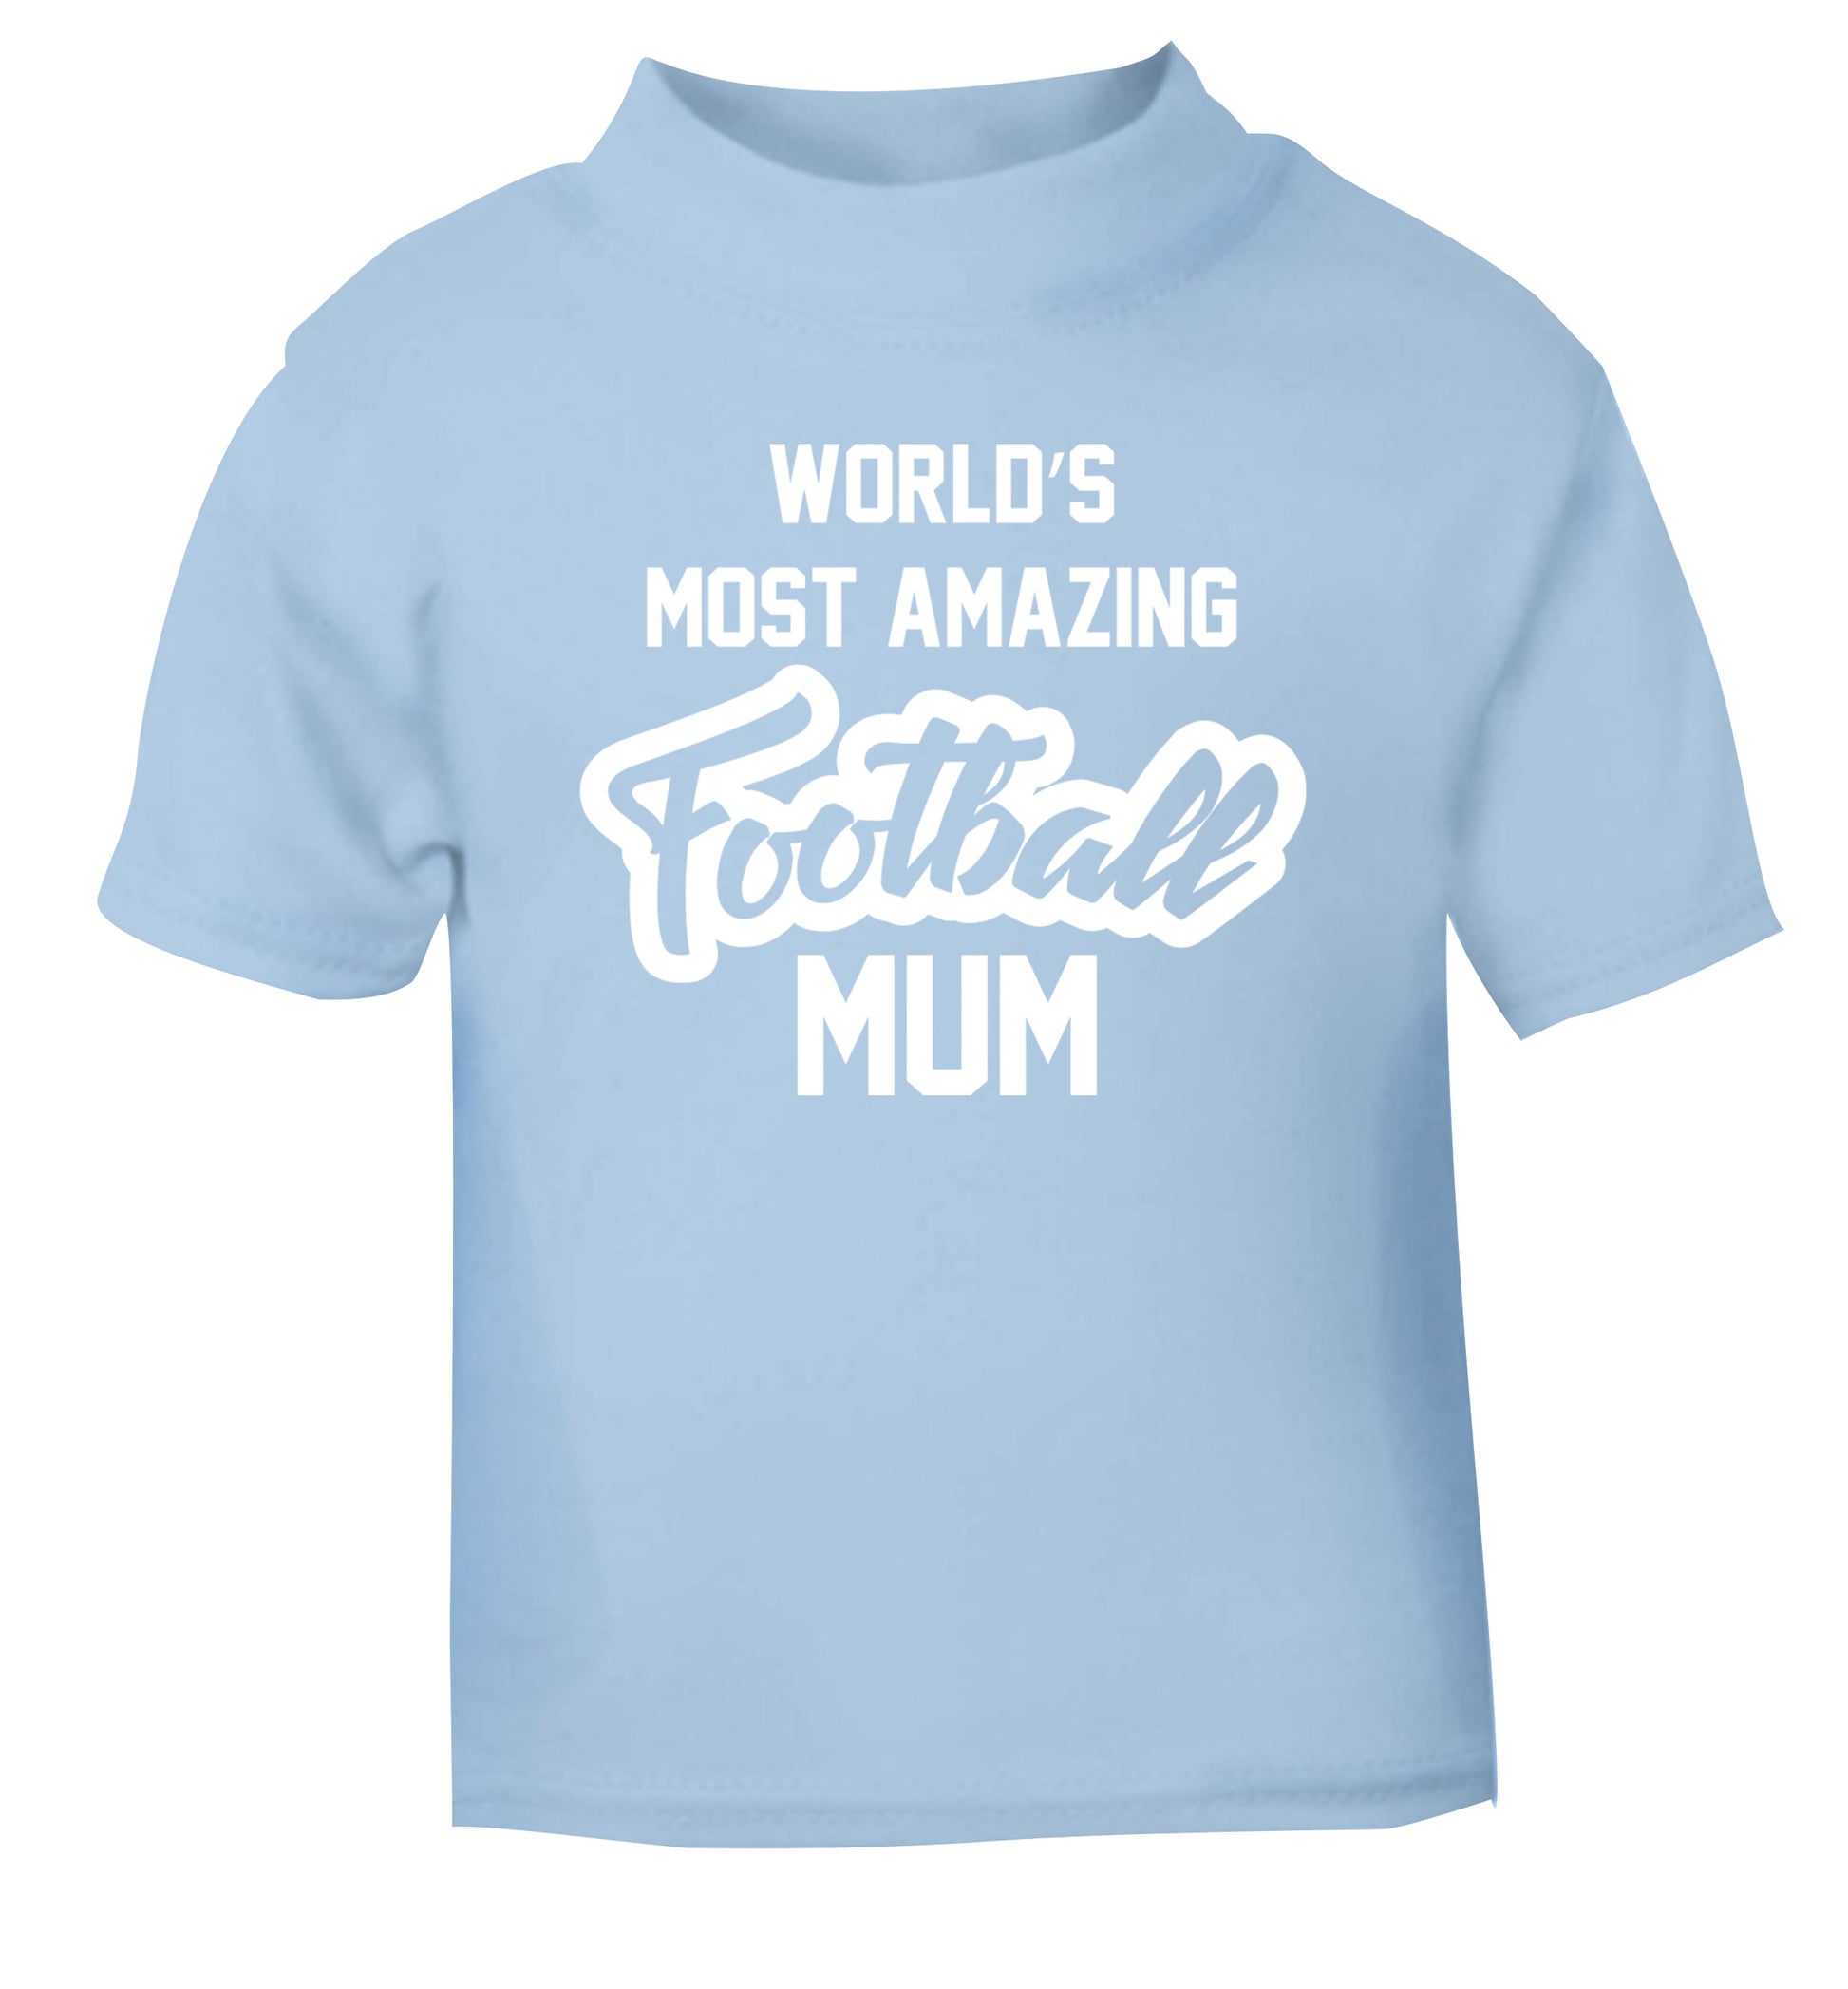 Worlds most amazing football mum light blue Baby Toddler Tshirt 2 Years